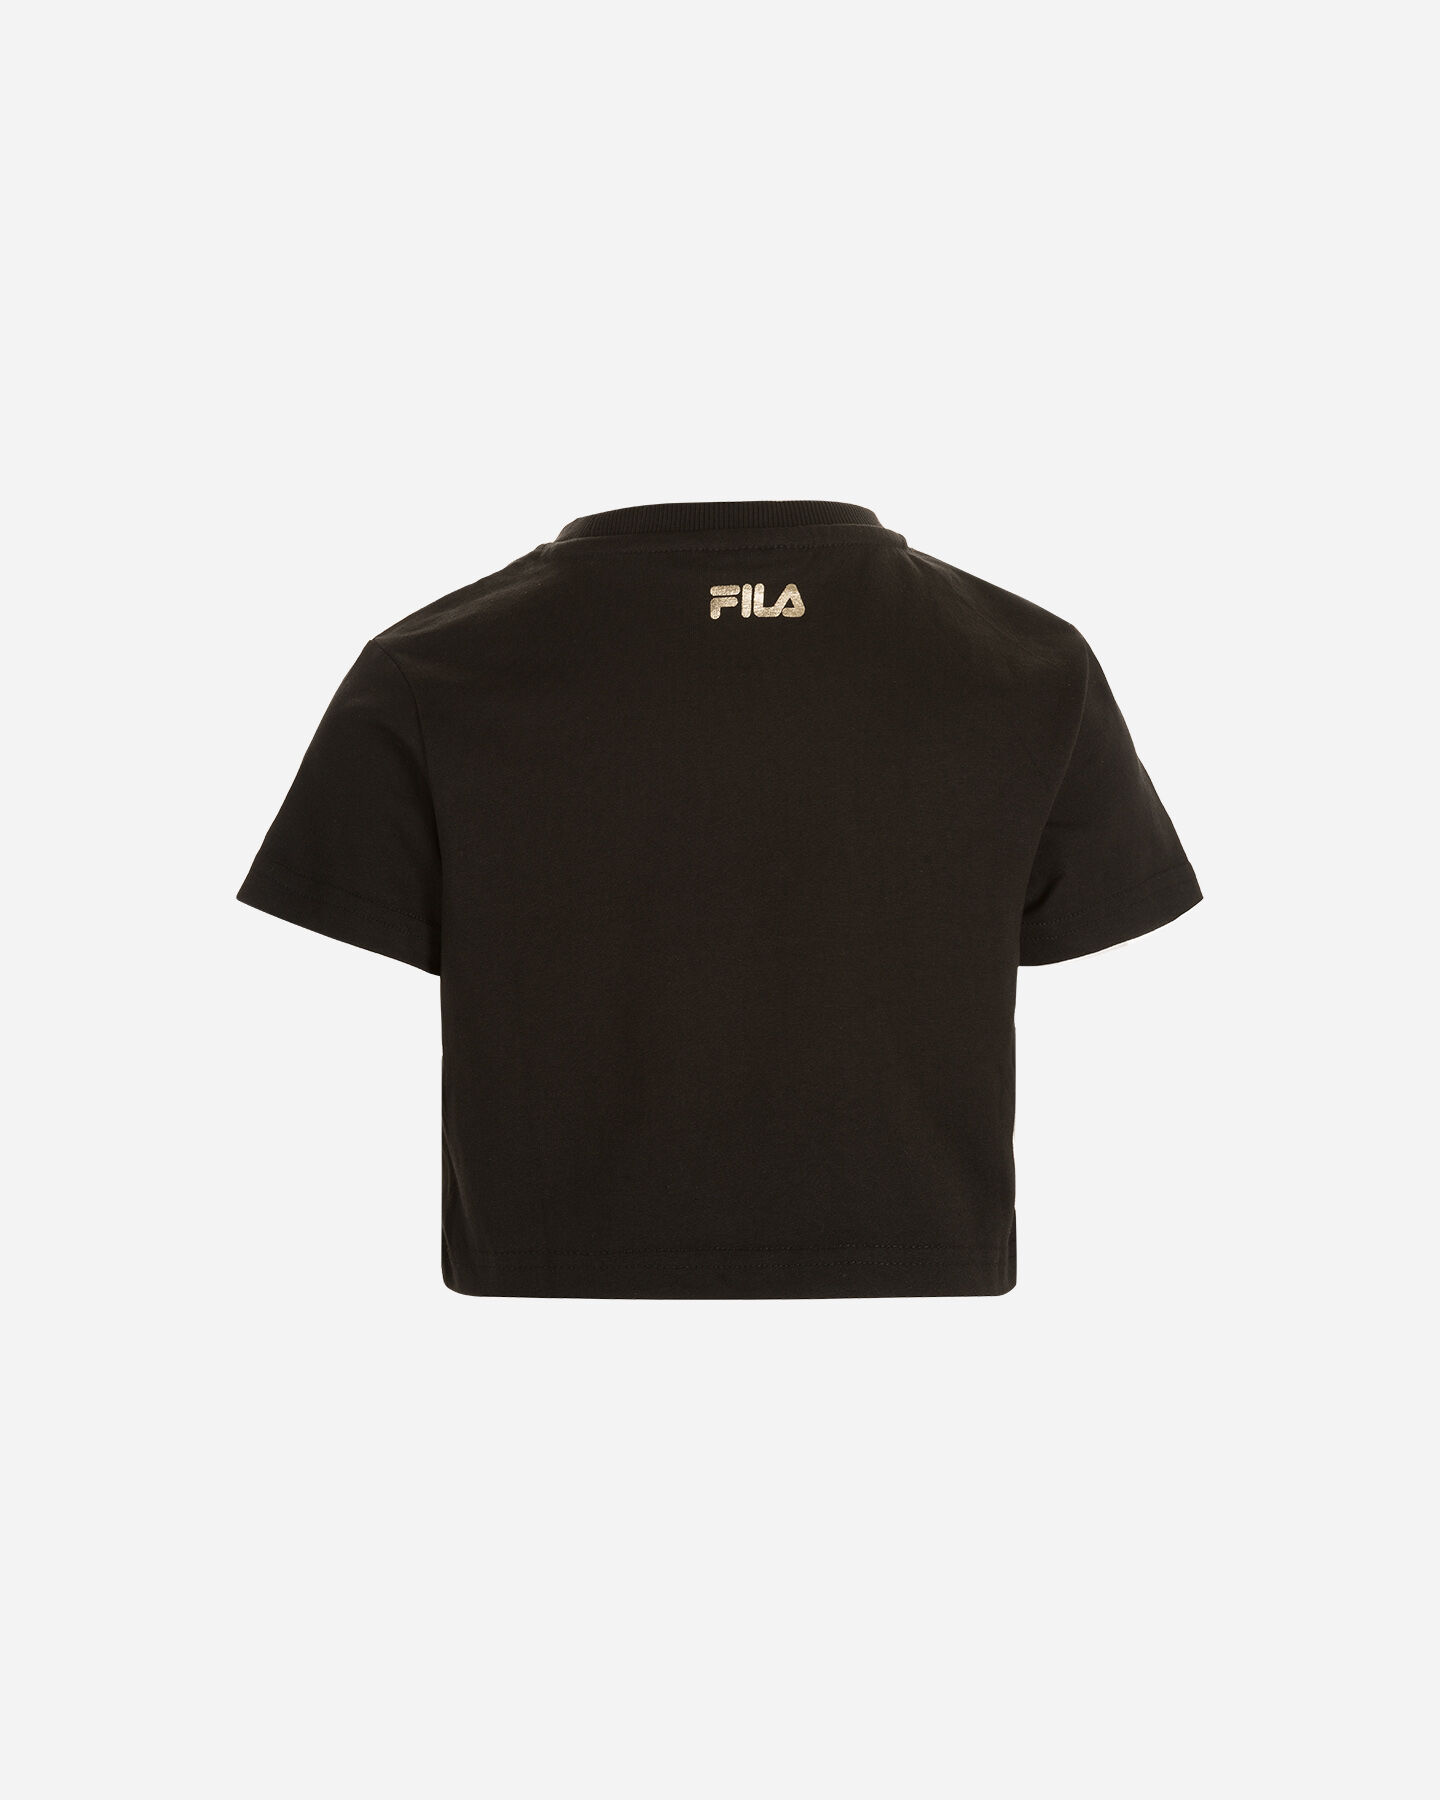  T-Shirt FILA CITYWEAR JR S4107417|050|6A scatto 1